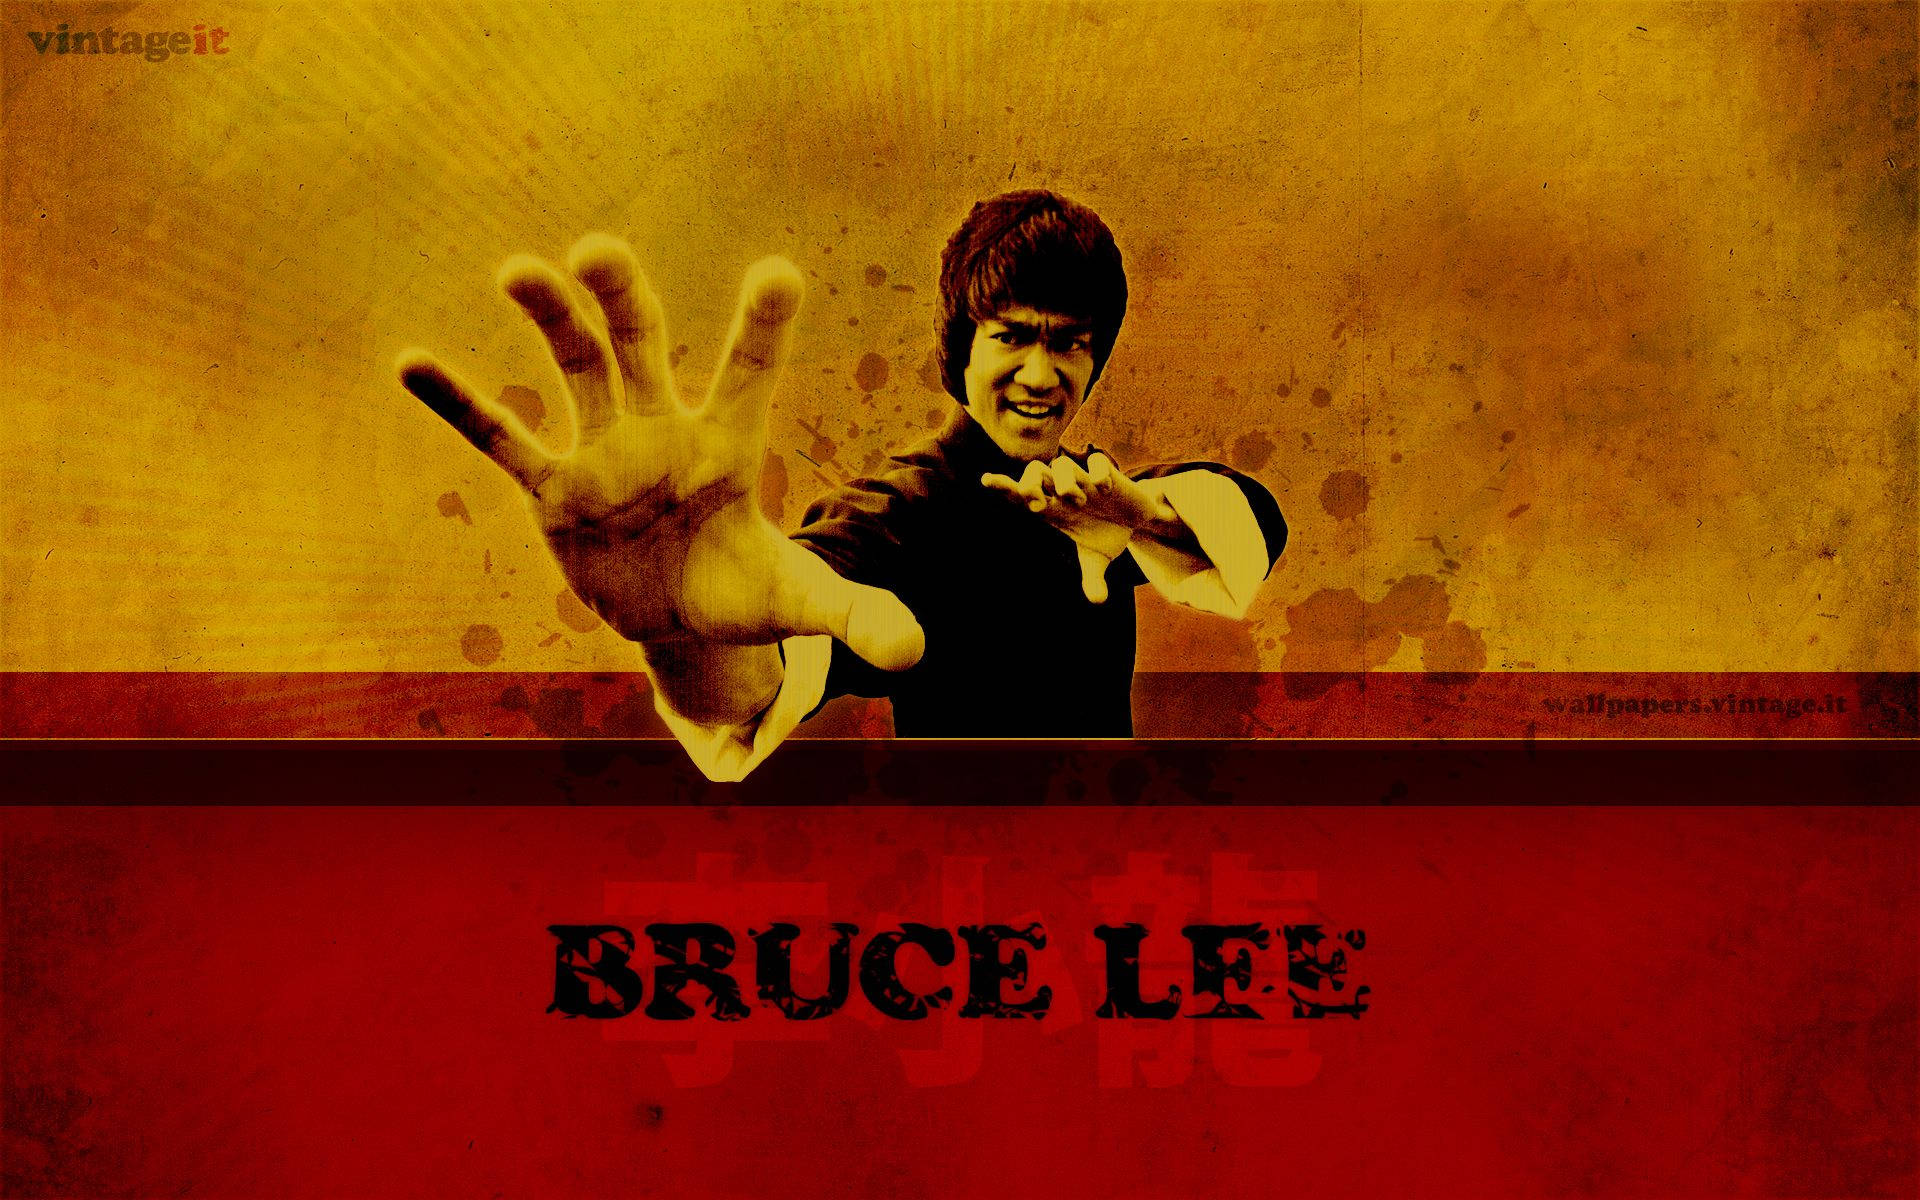 Bruce Lee Wallpaper - Free Desktop Hd Ipad Iphone Wallpaper Wallpaper